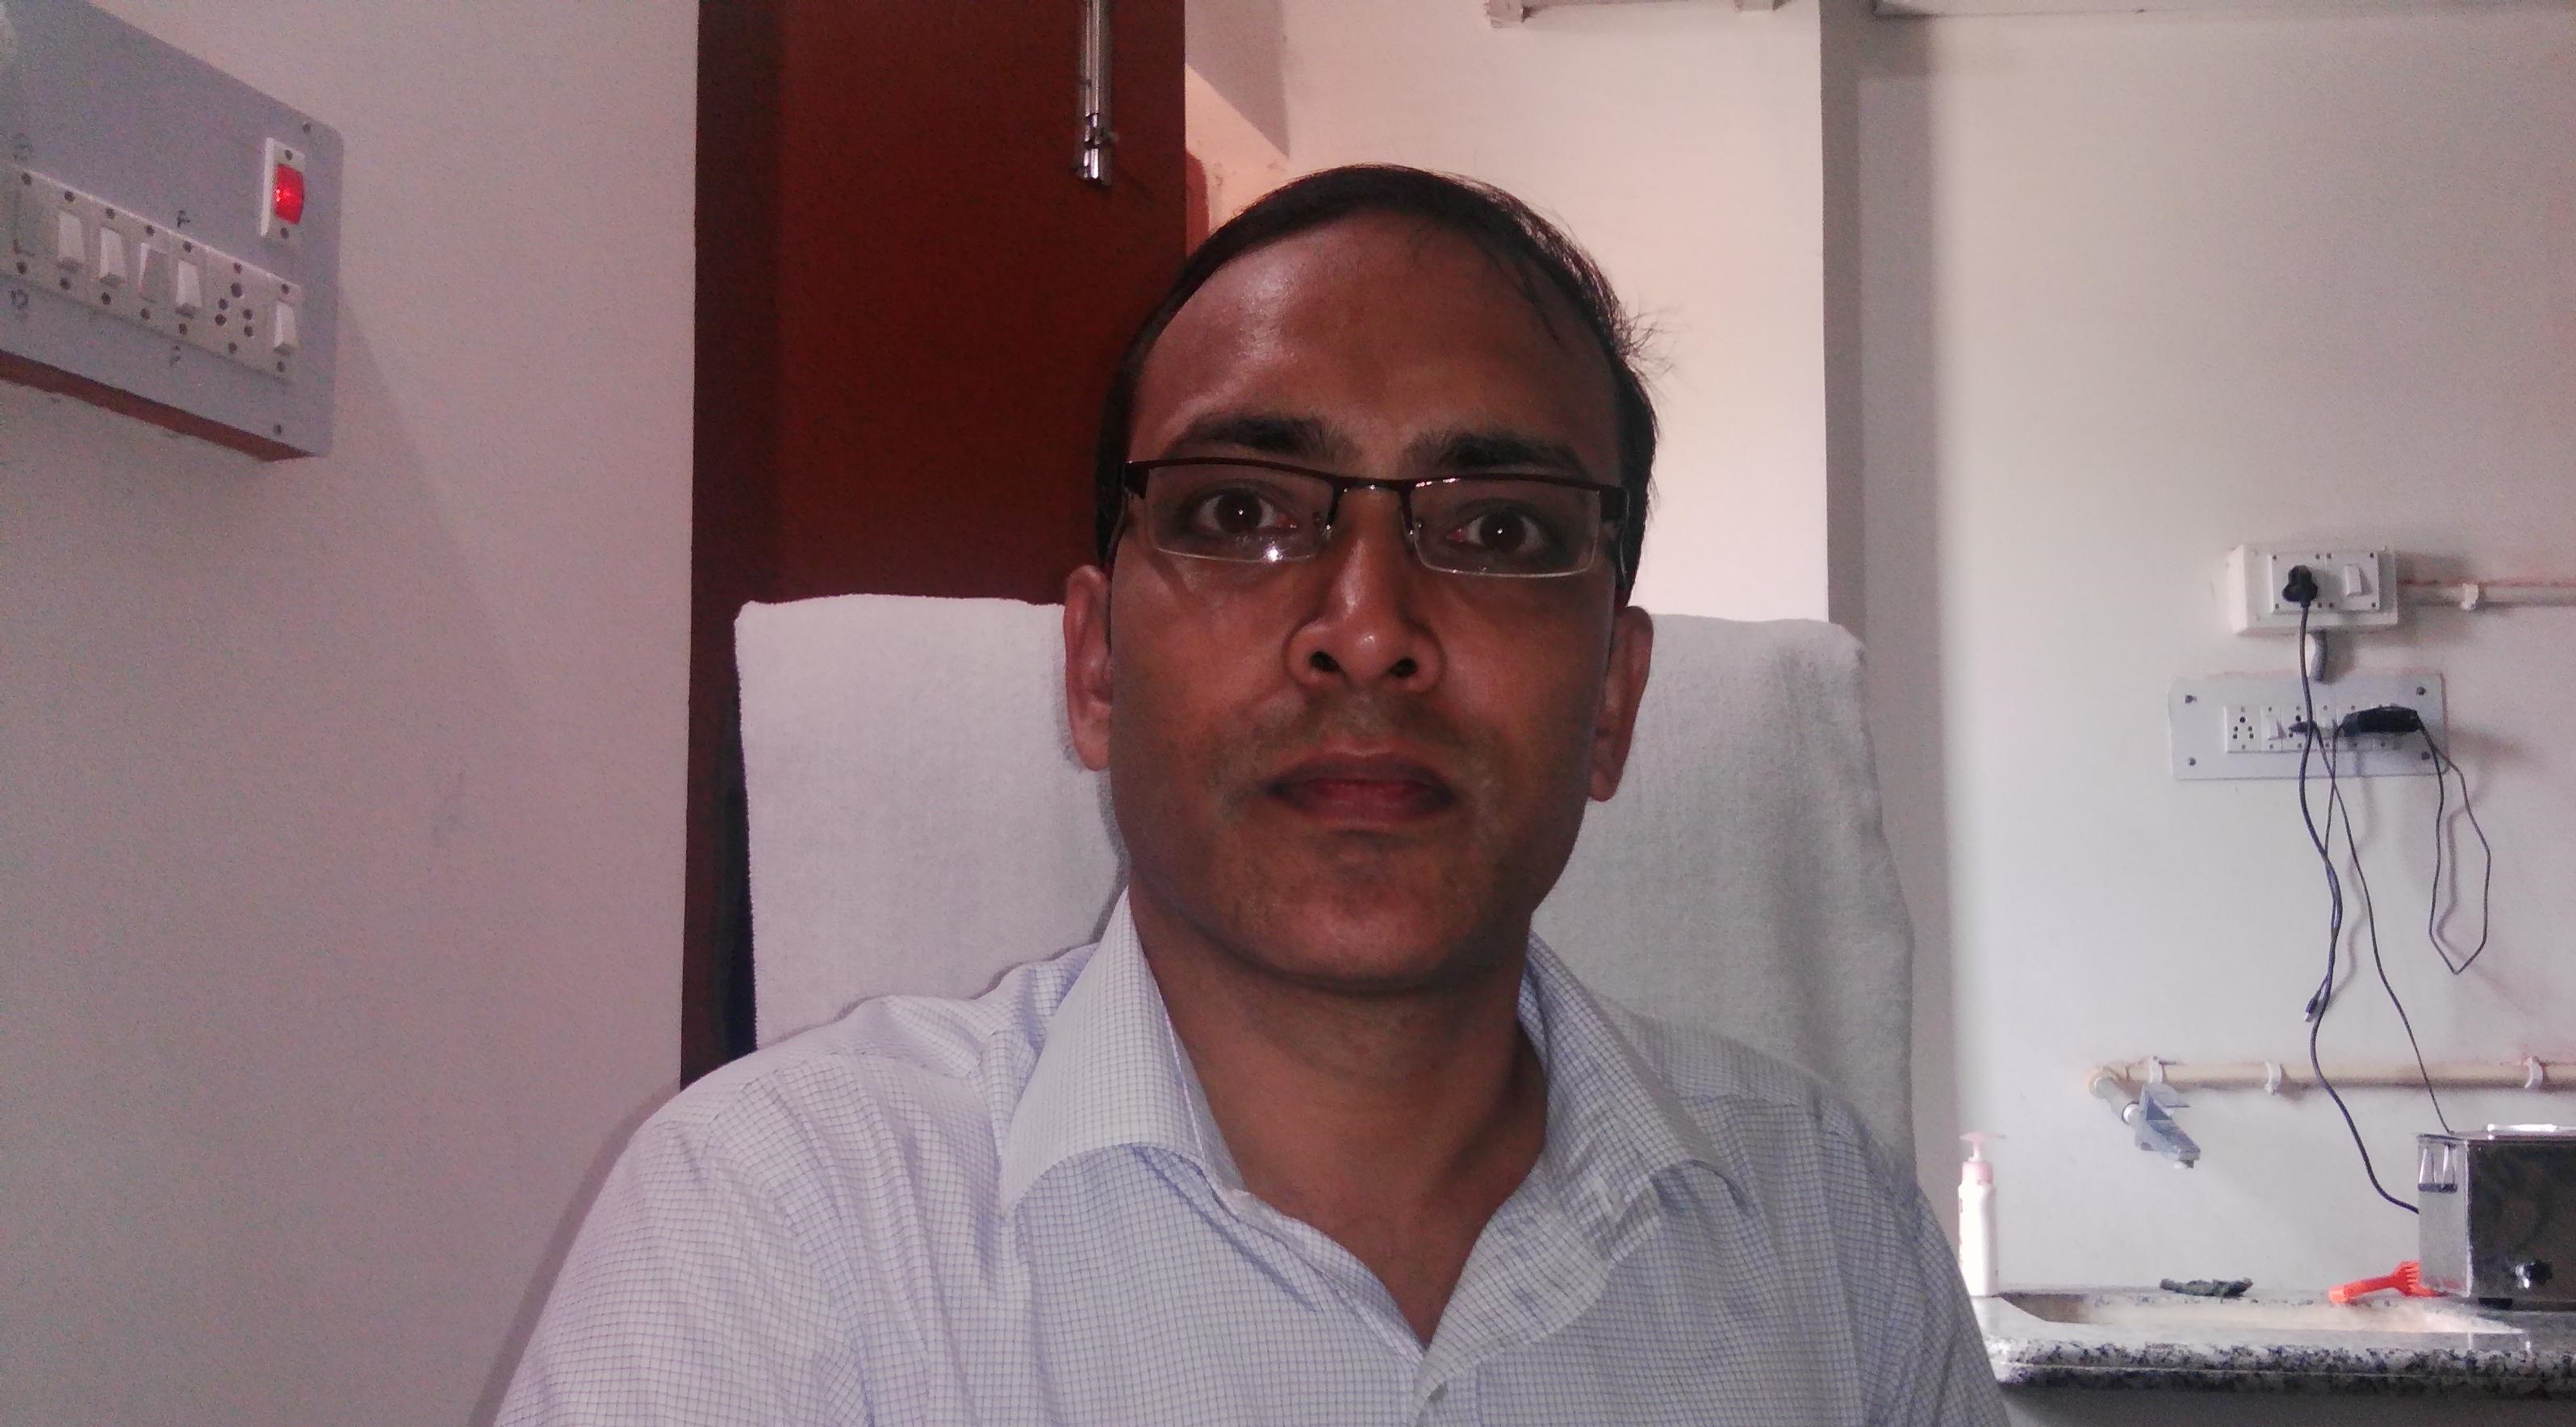 Dr.Rajiv Kumar